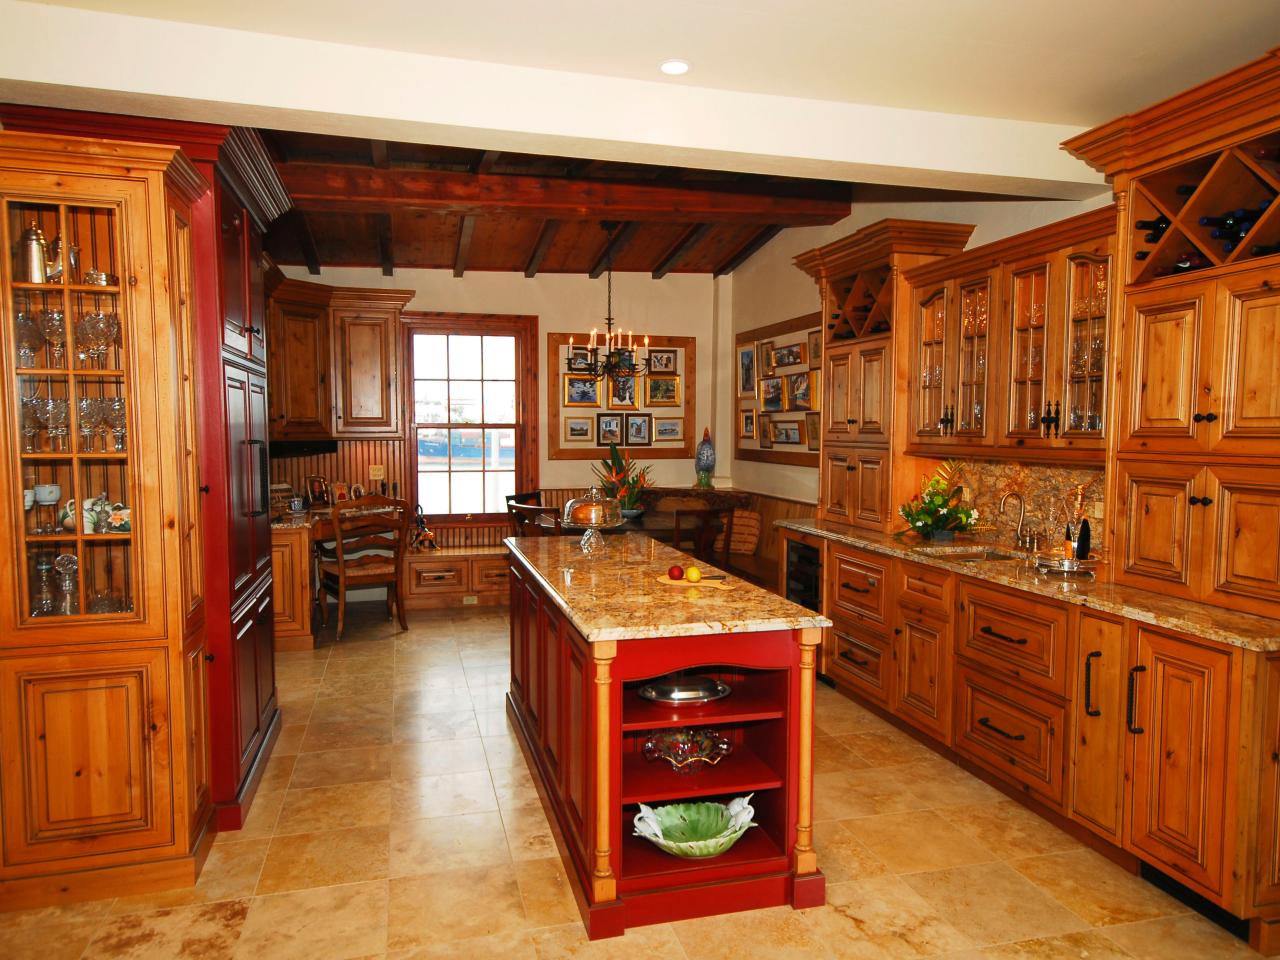 SP0130 RX all wood kitchen s4x3.jpg.rend .hgtvcom.1280.960